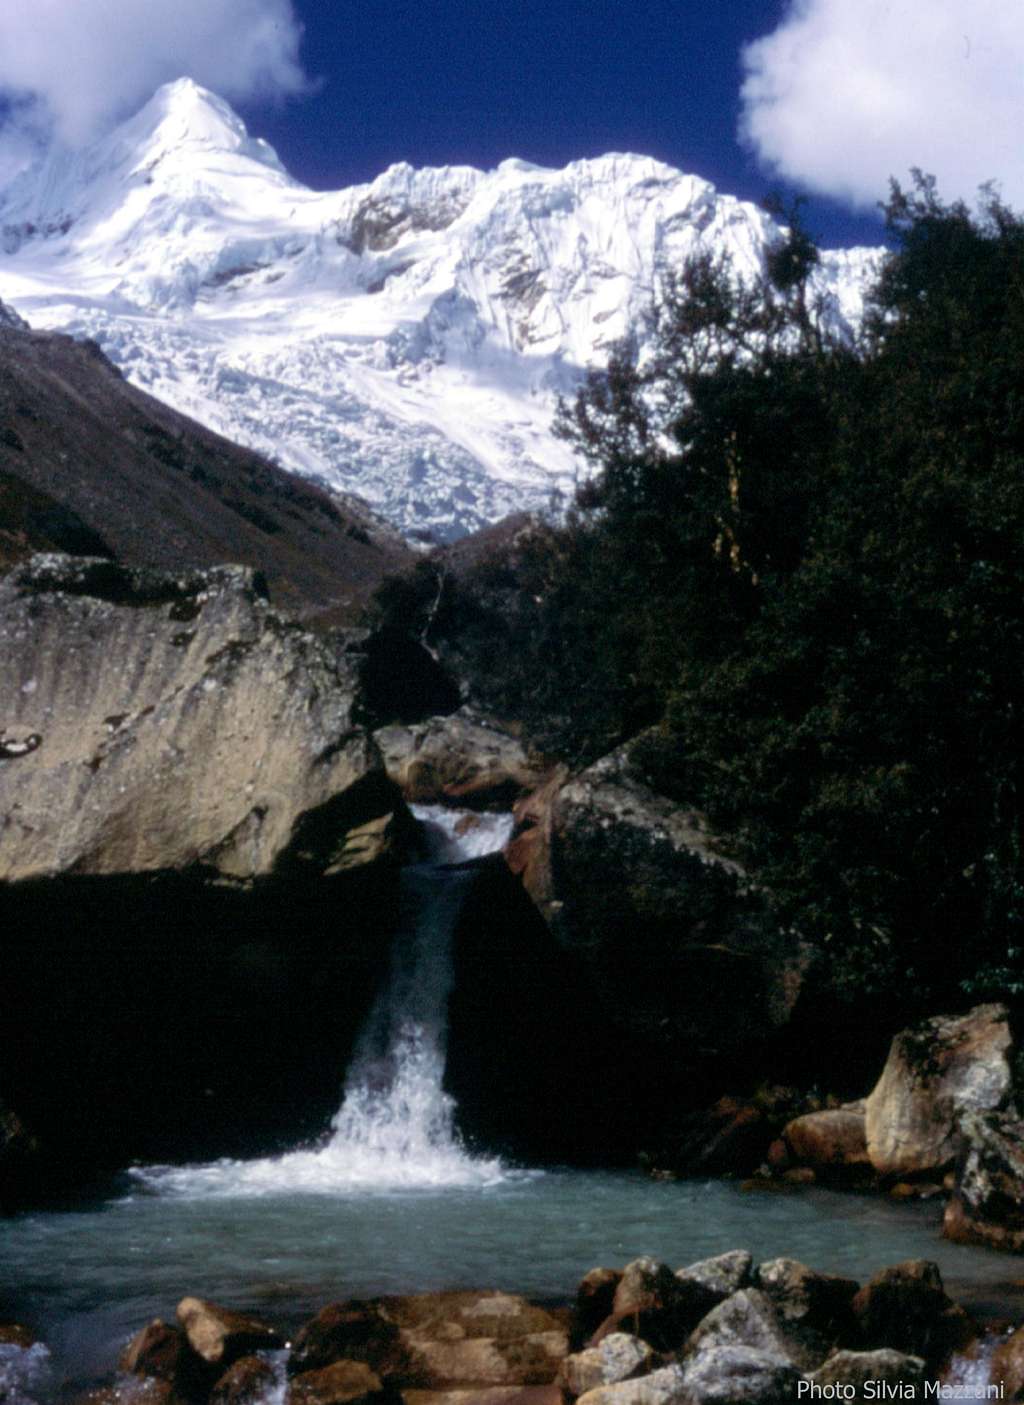 Little waterfall near the BC and Toqqlaraju